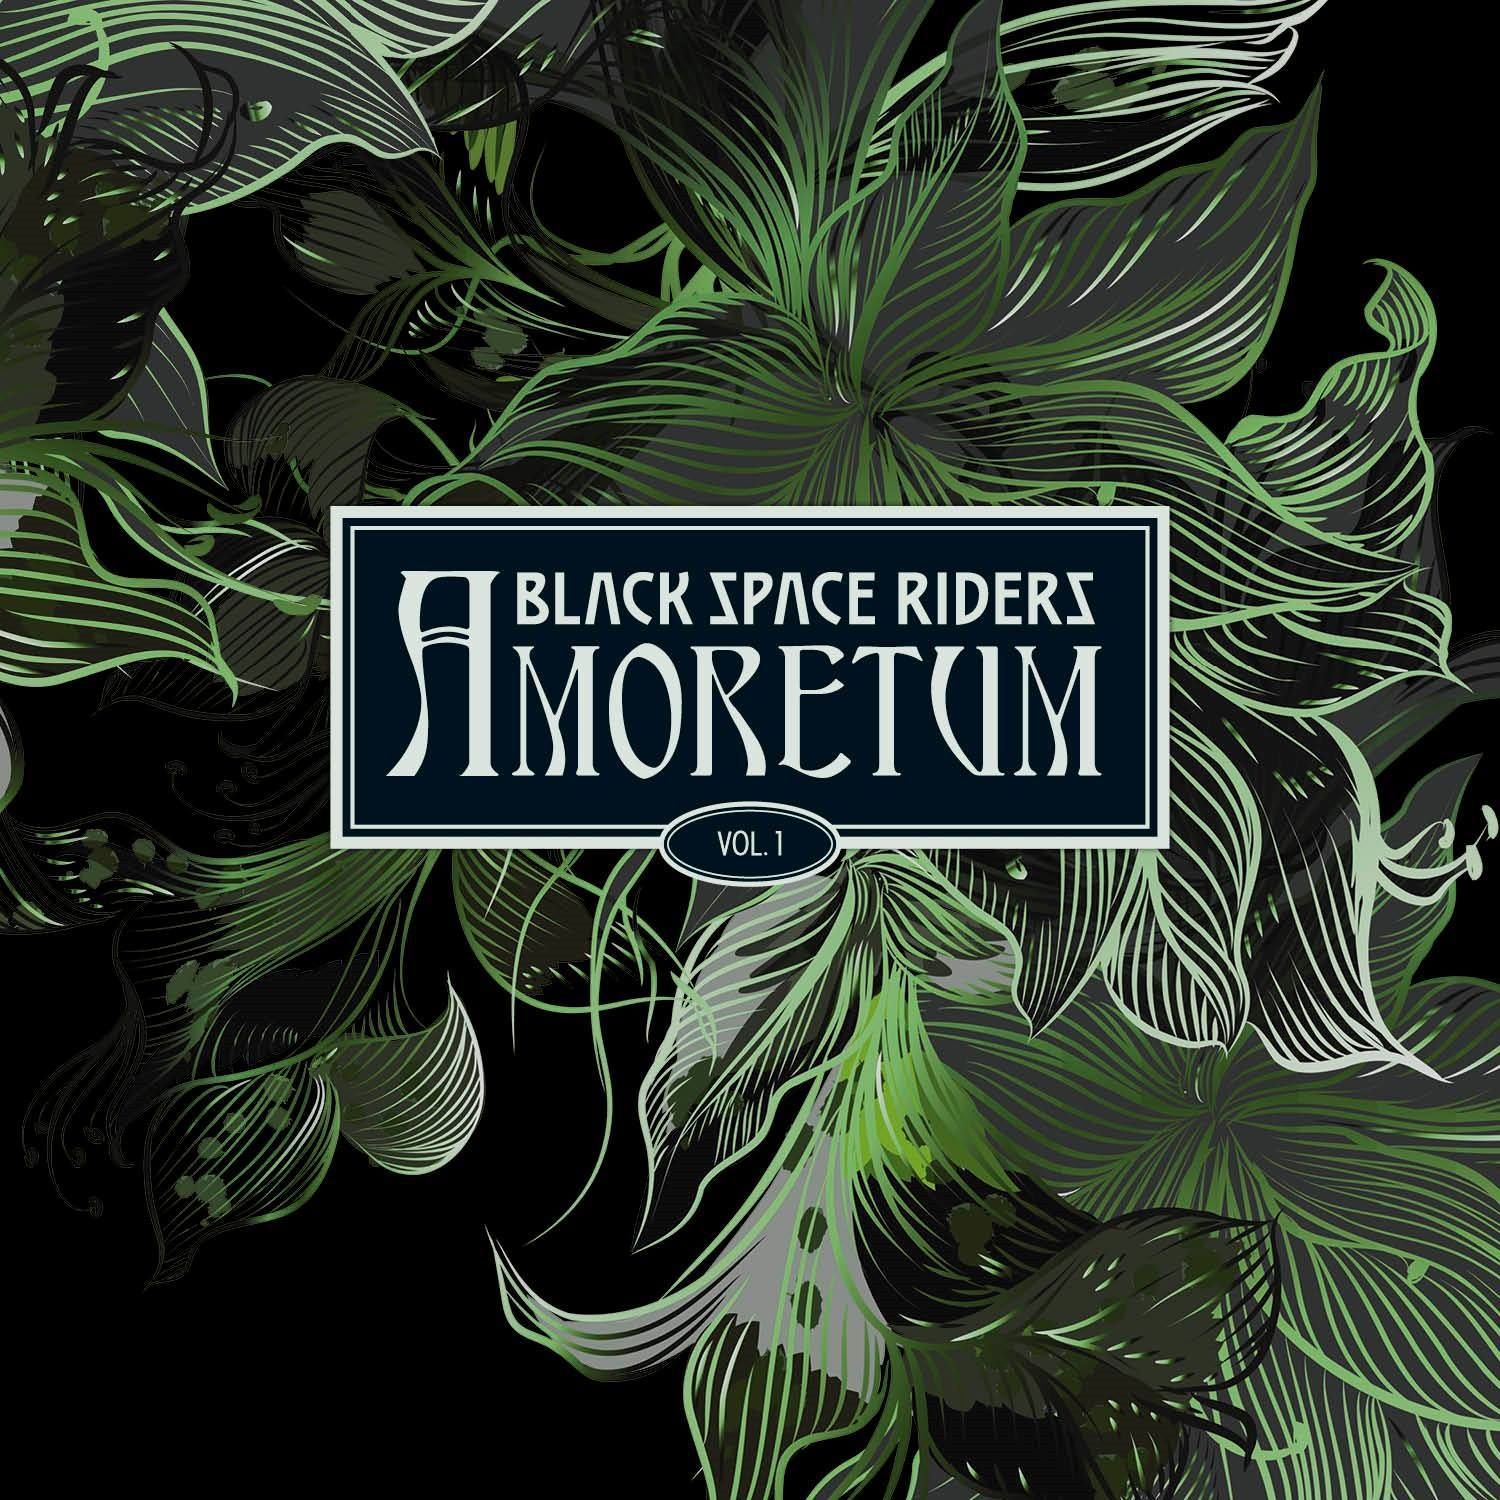 Black Space Riders: "Amoretum Vol. 1" kommt im Januar